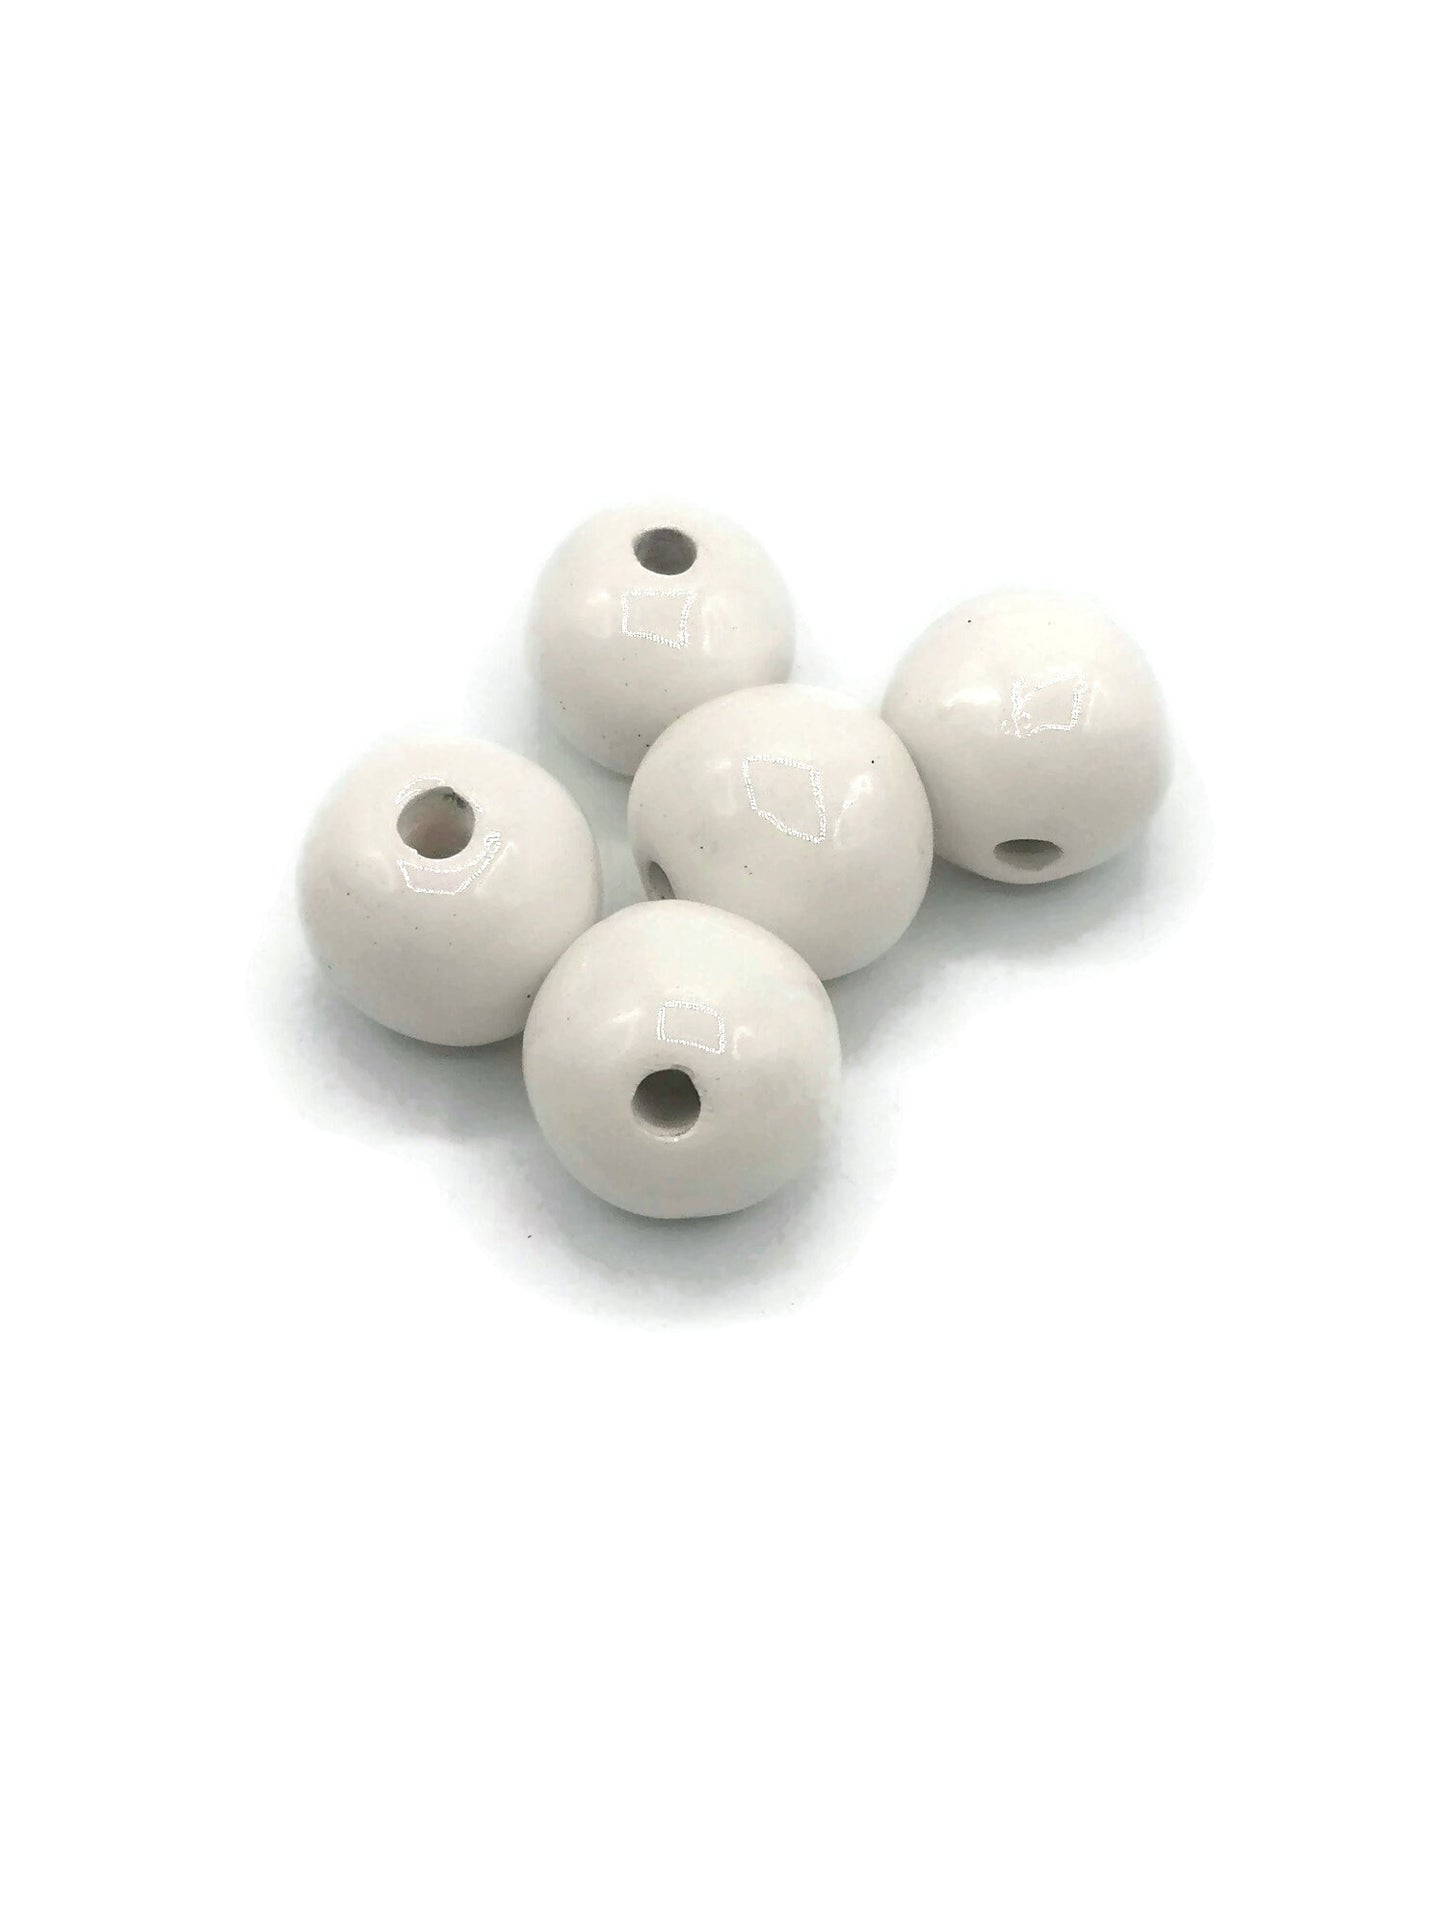 5 Pc 20mm Handmade Ceramic Beads For Jewelry Making, Large Hole Macrame Beads, Unique Clay Beads Artisan Craft Supplies - Ceramica Ana Rafael